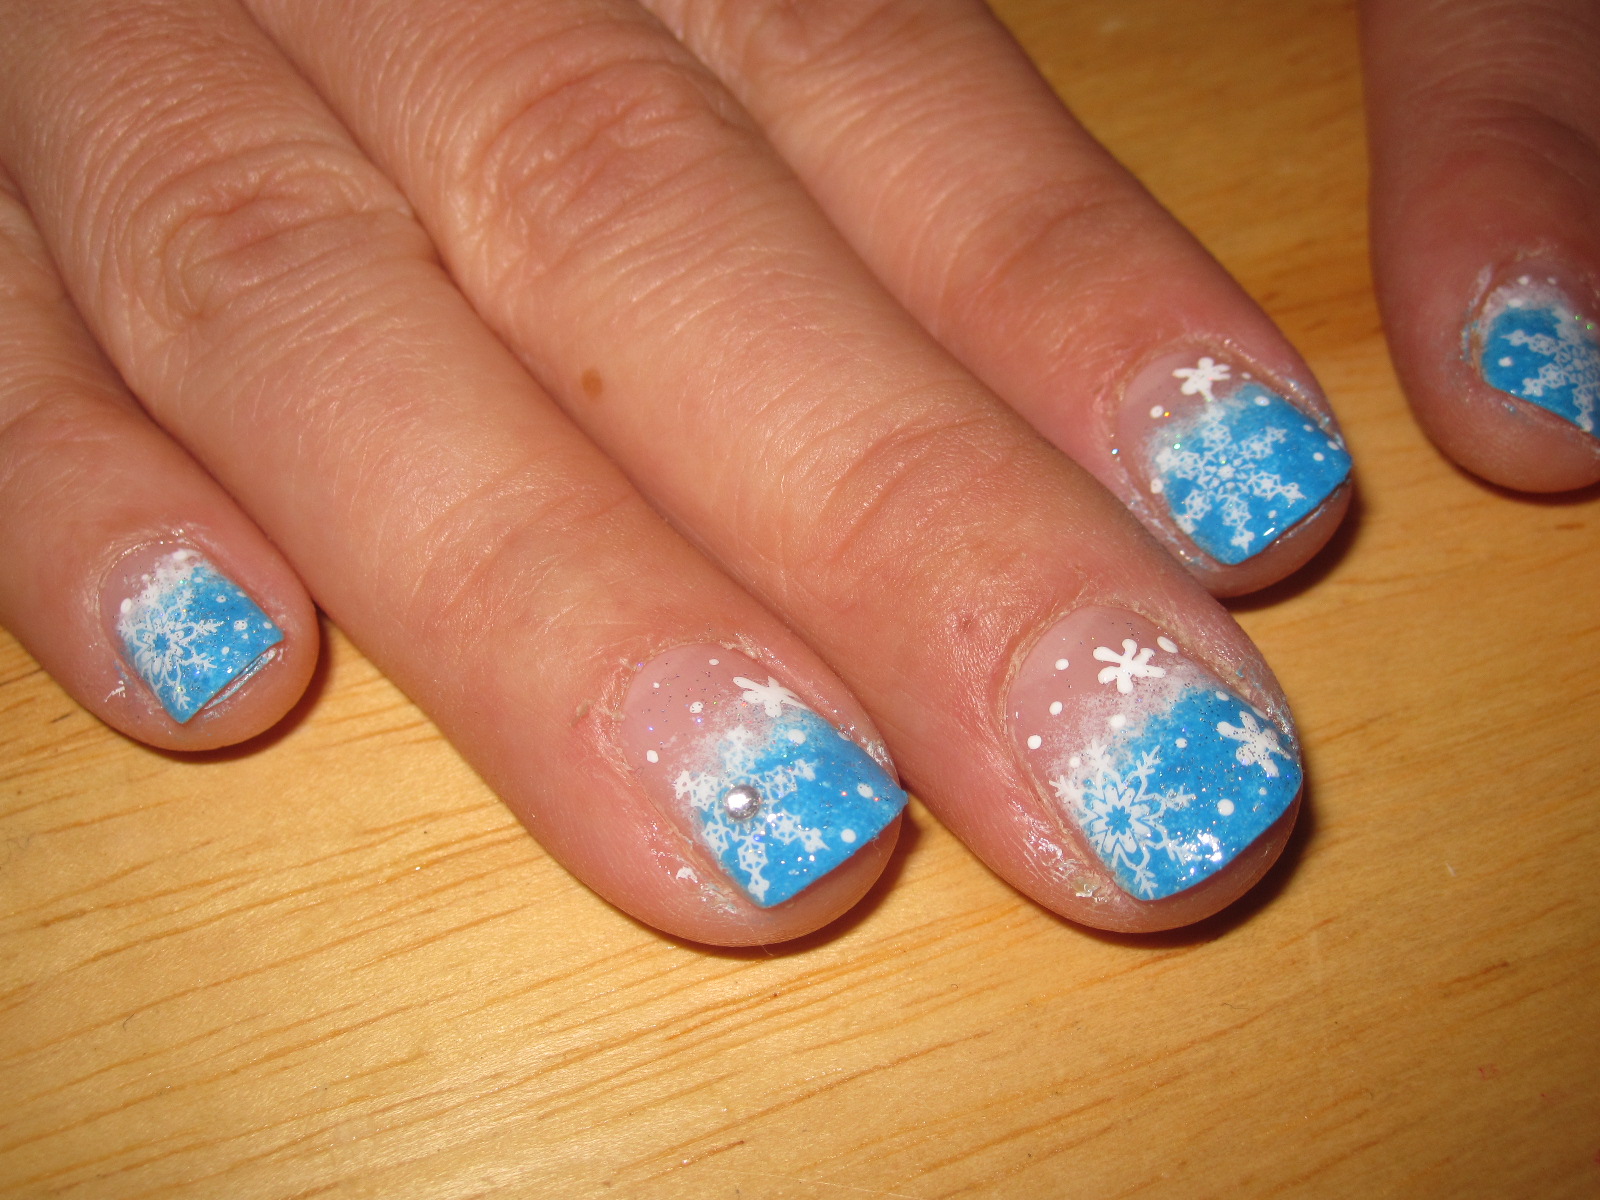 Jelly's Nails Snowflake Nails! D